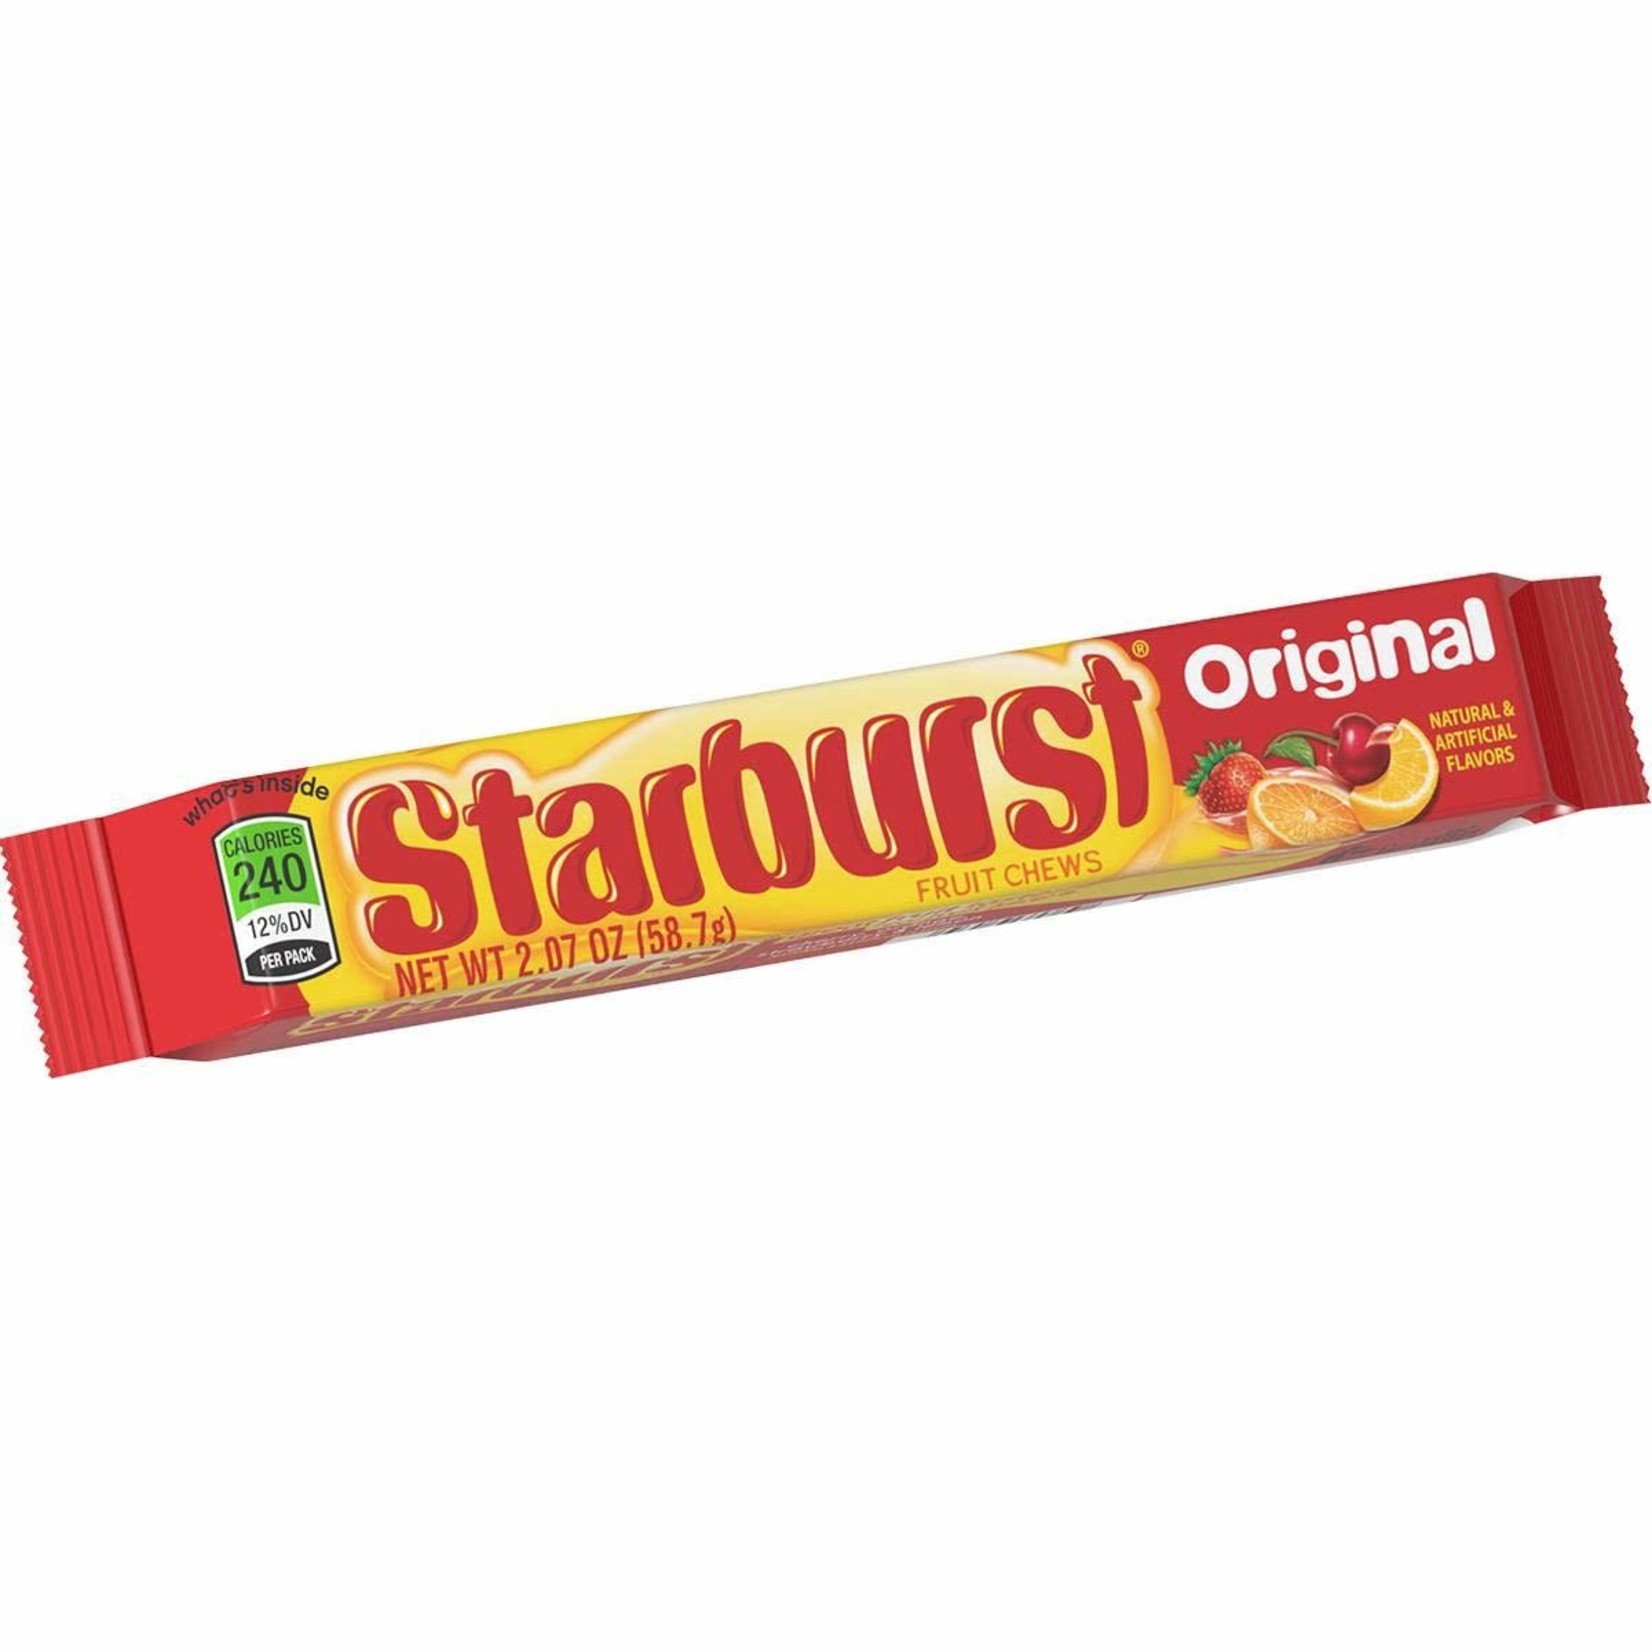 Starburst Starburst Original 2.07 oz